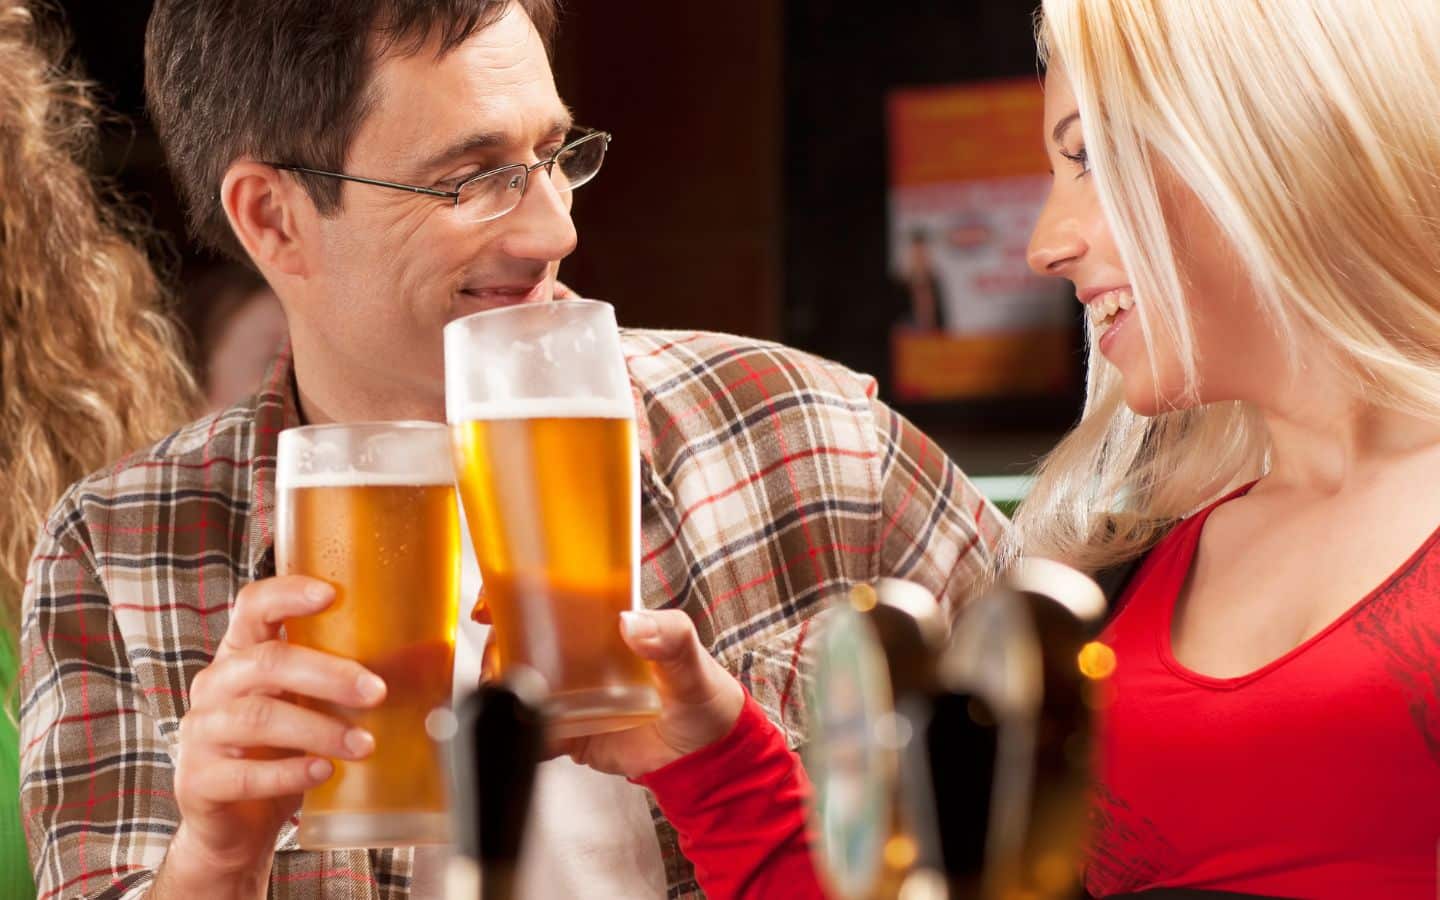 A young couple enjoying pints of beer at a bar